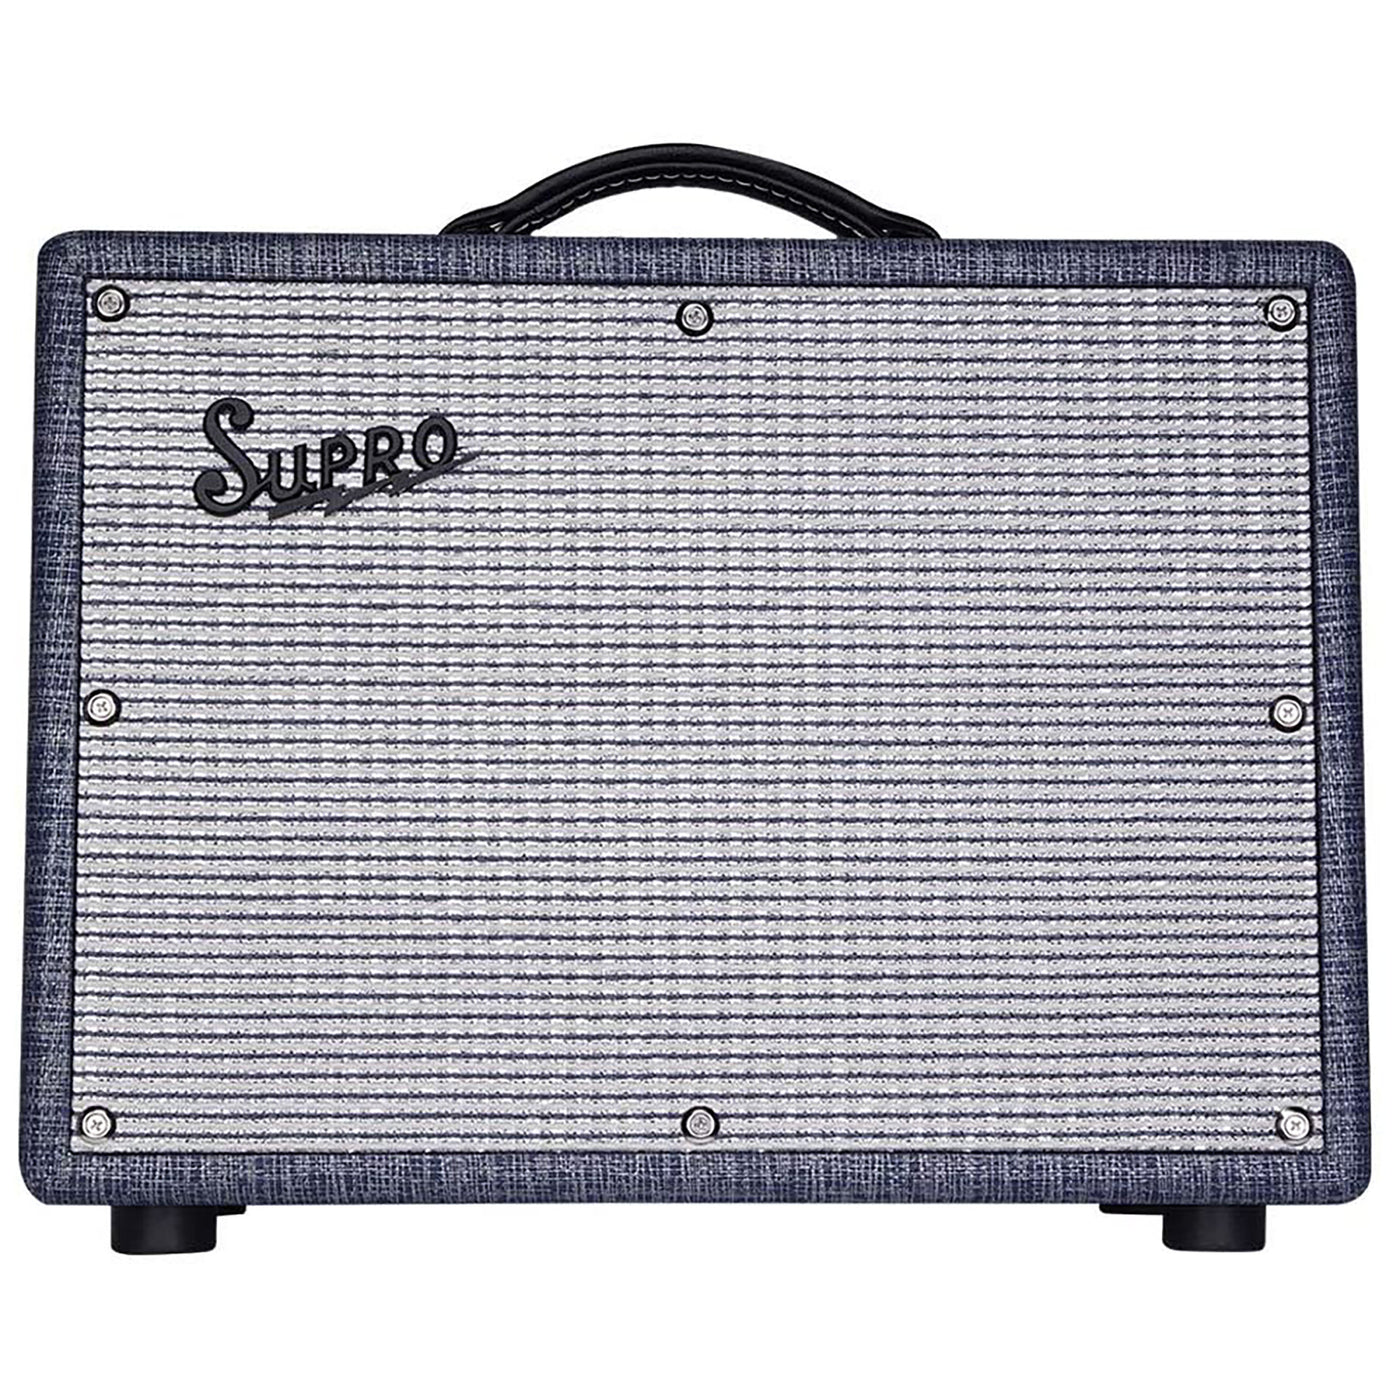 Supro Keeley 10 Guitar Amplifier